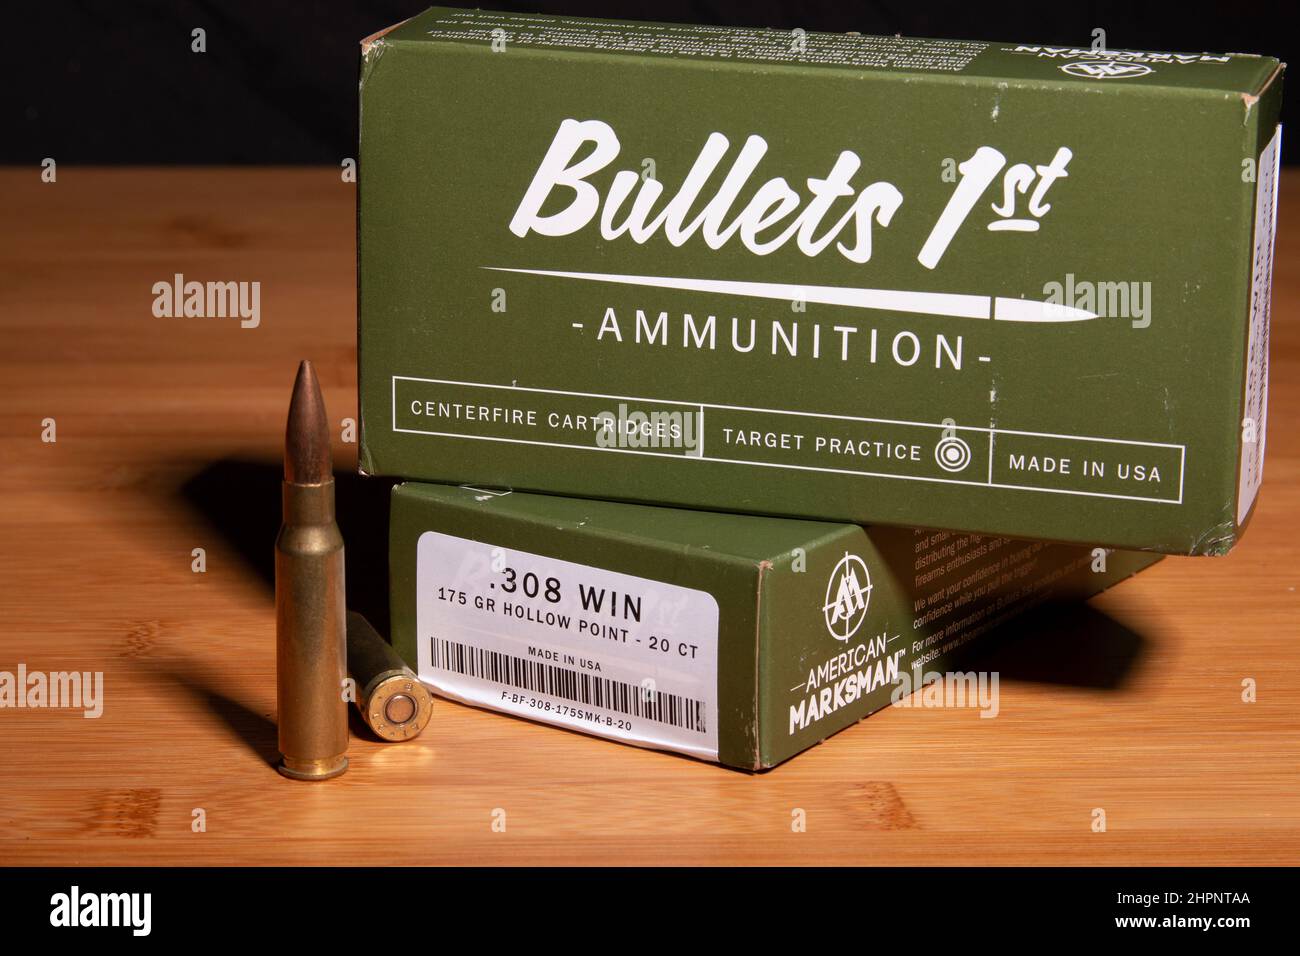 Bullets 1st .308 win Sierra Matchking Ammunition Stock Photo